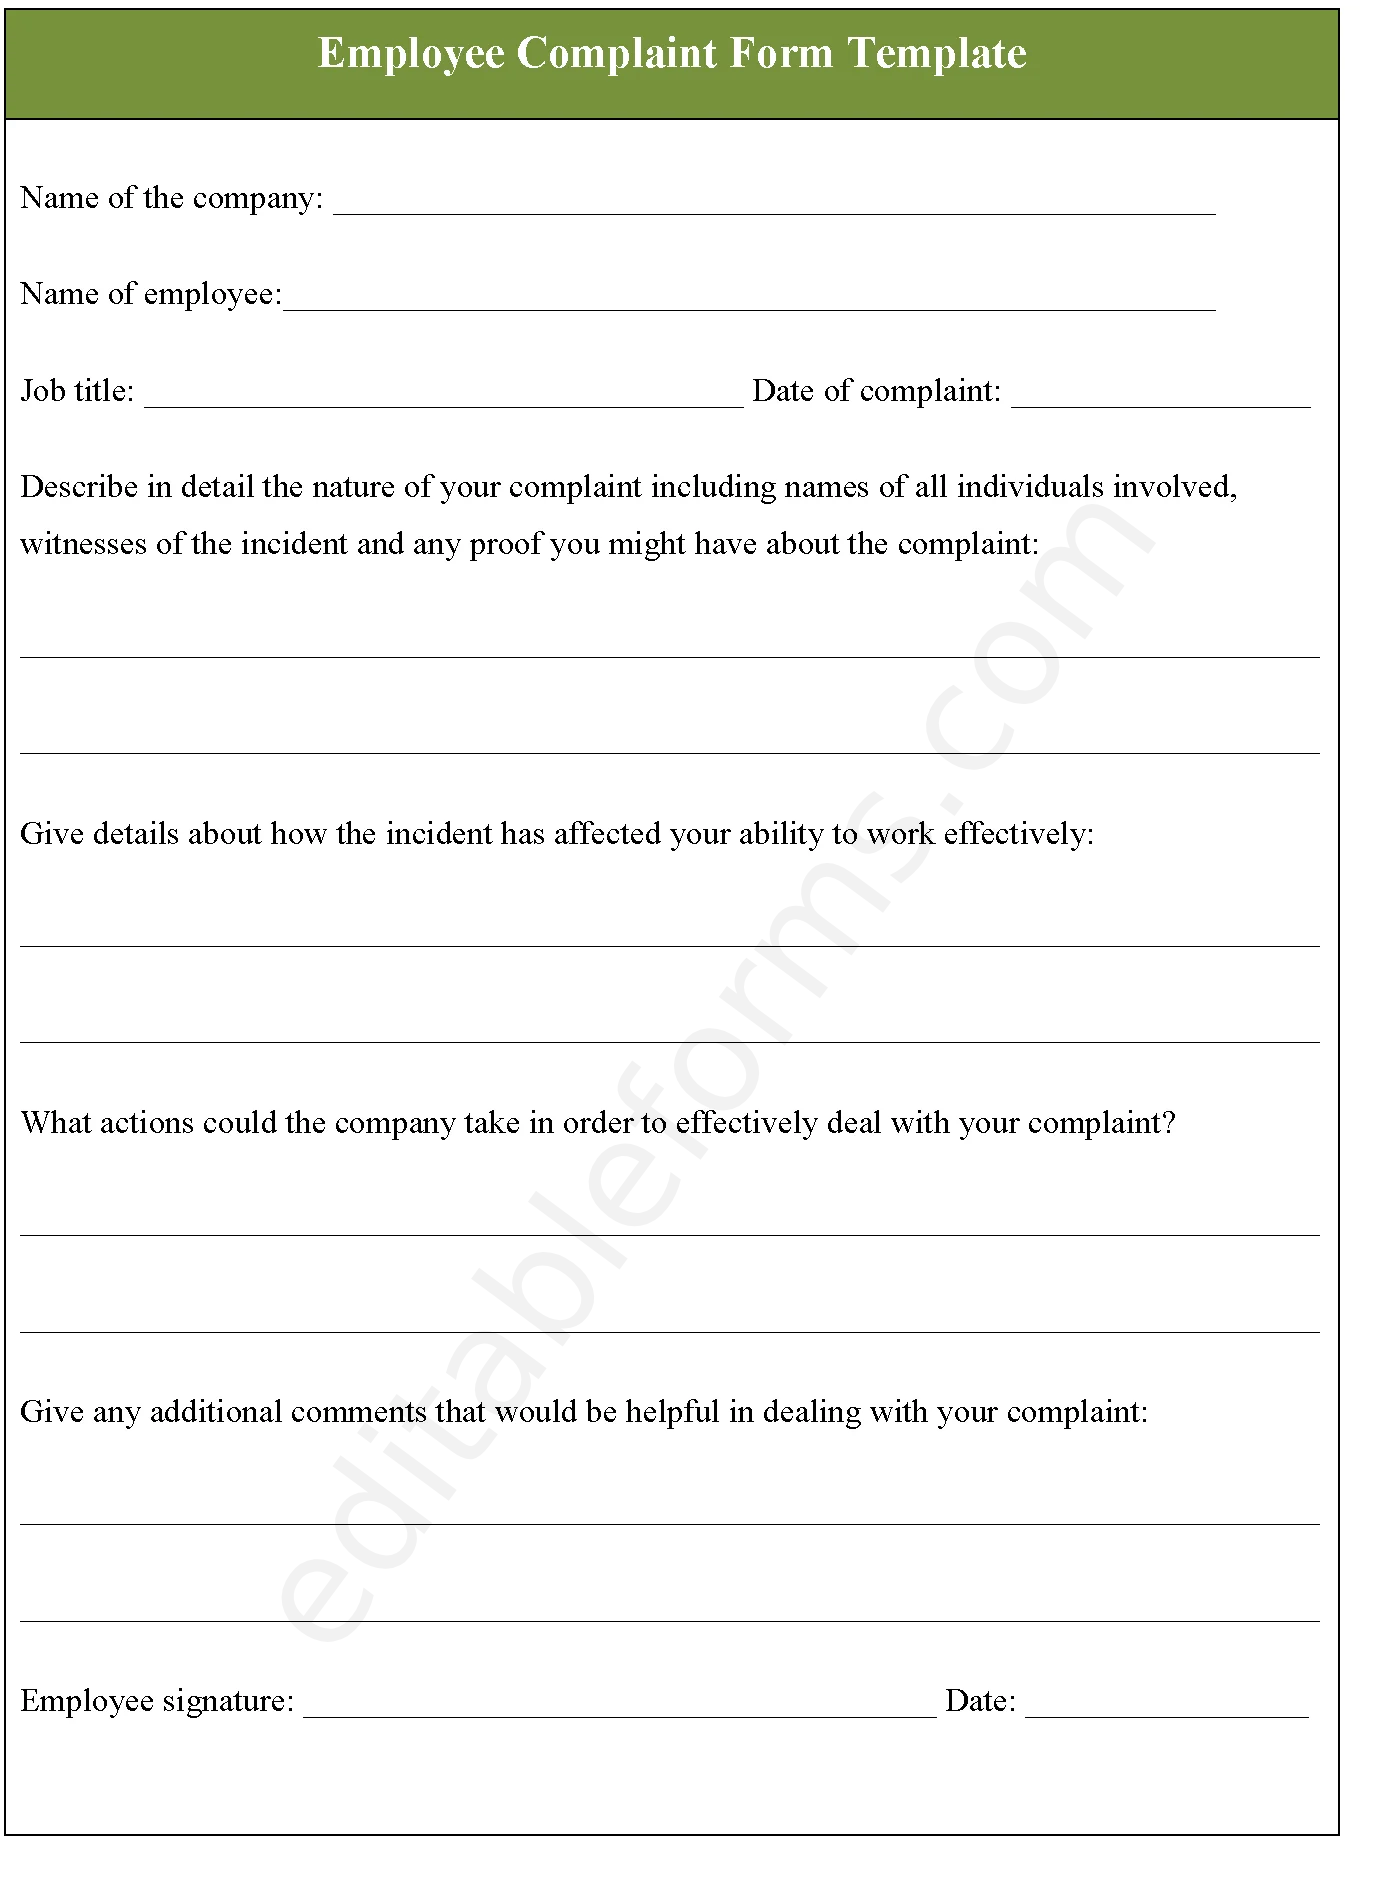 Employee Complaint Form Templa